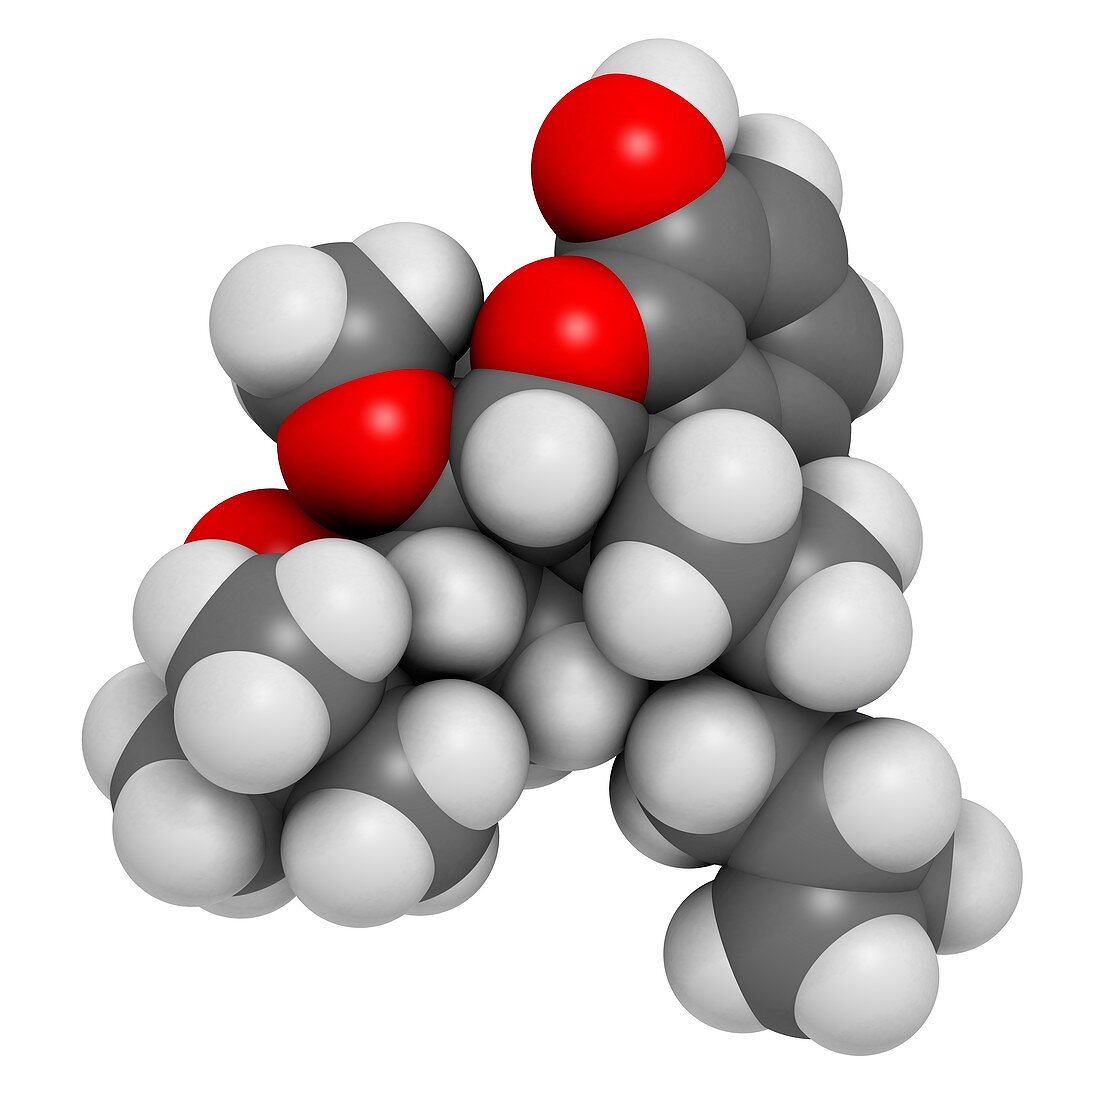 Buprenorphine opioid drug molecule